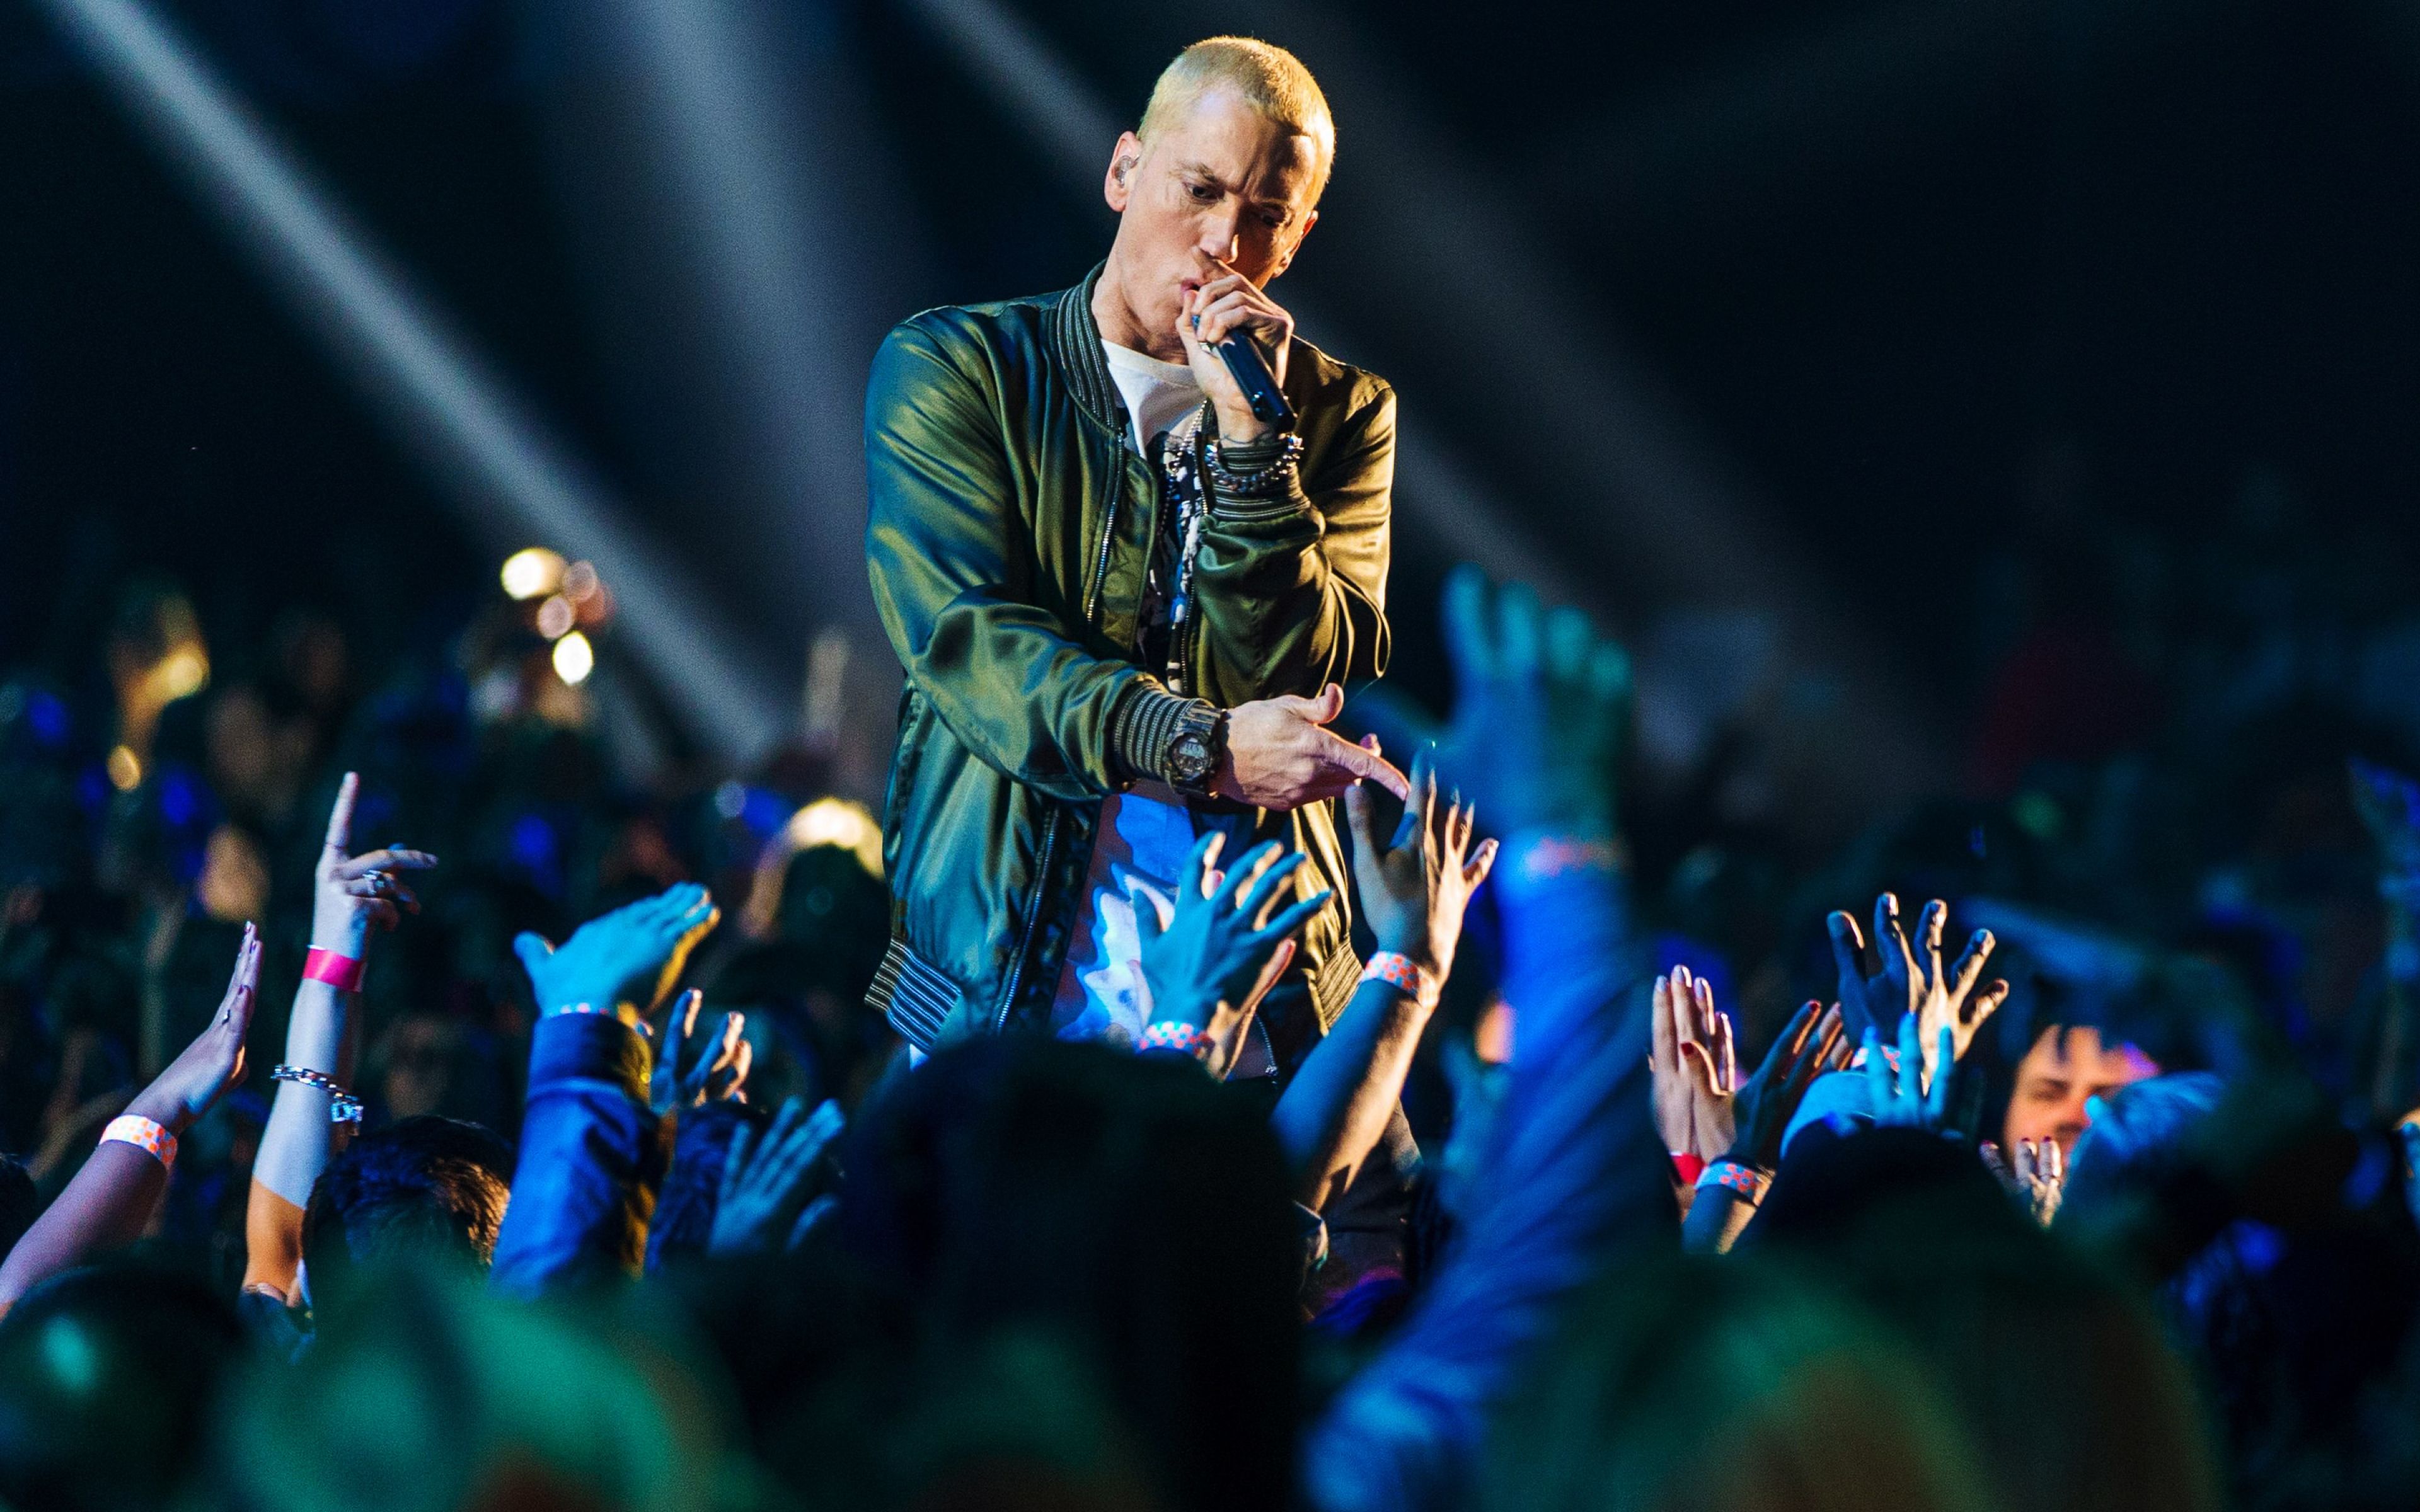 Eminem HD Wallpapers (81+ images)